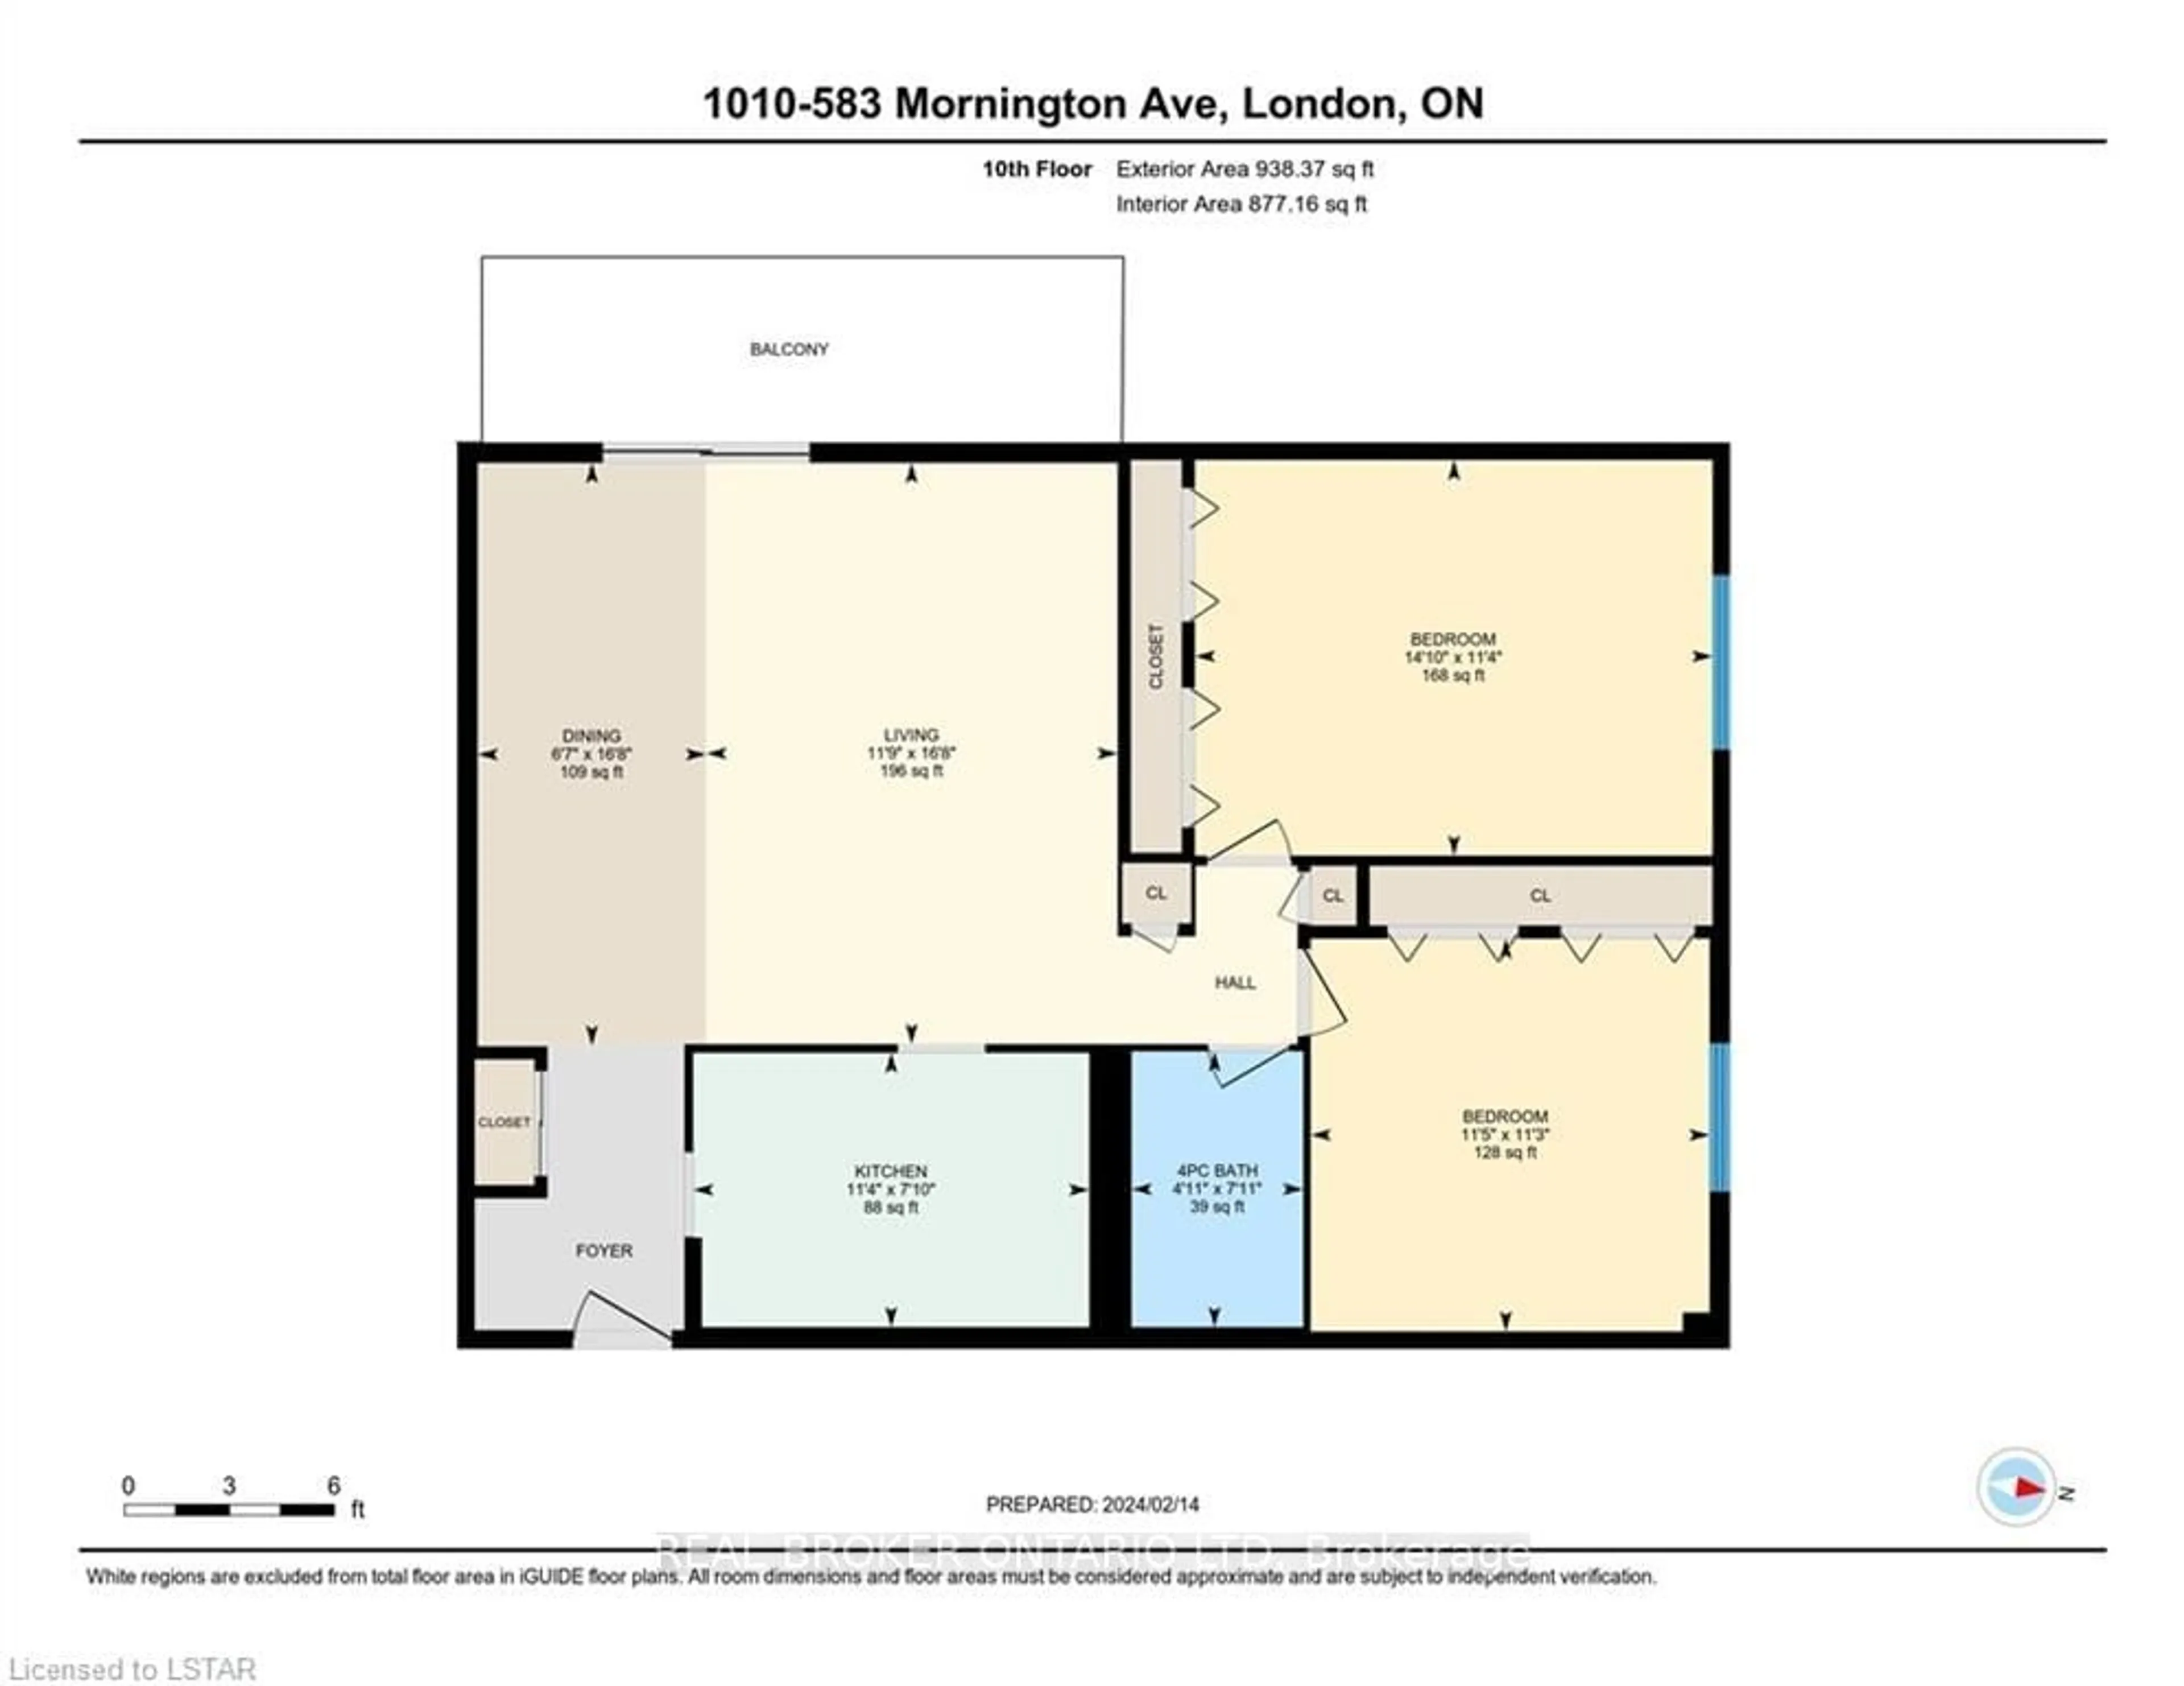 Floor plan for 583 Mornington Ave #1010, London Ontario N5Y 3E9